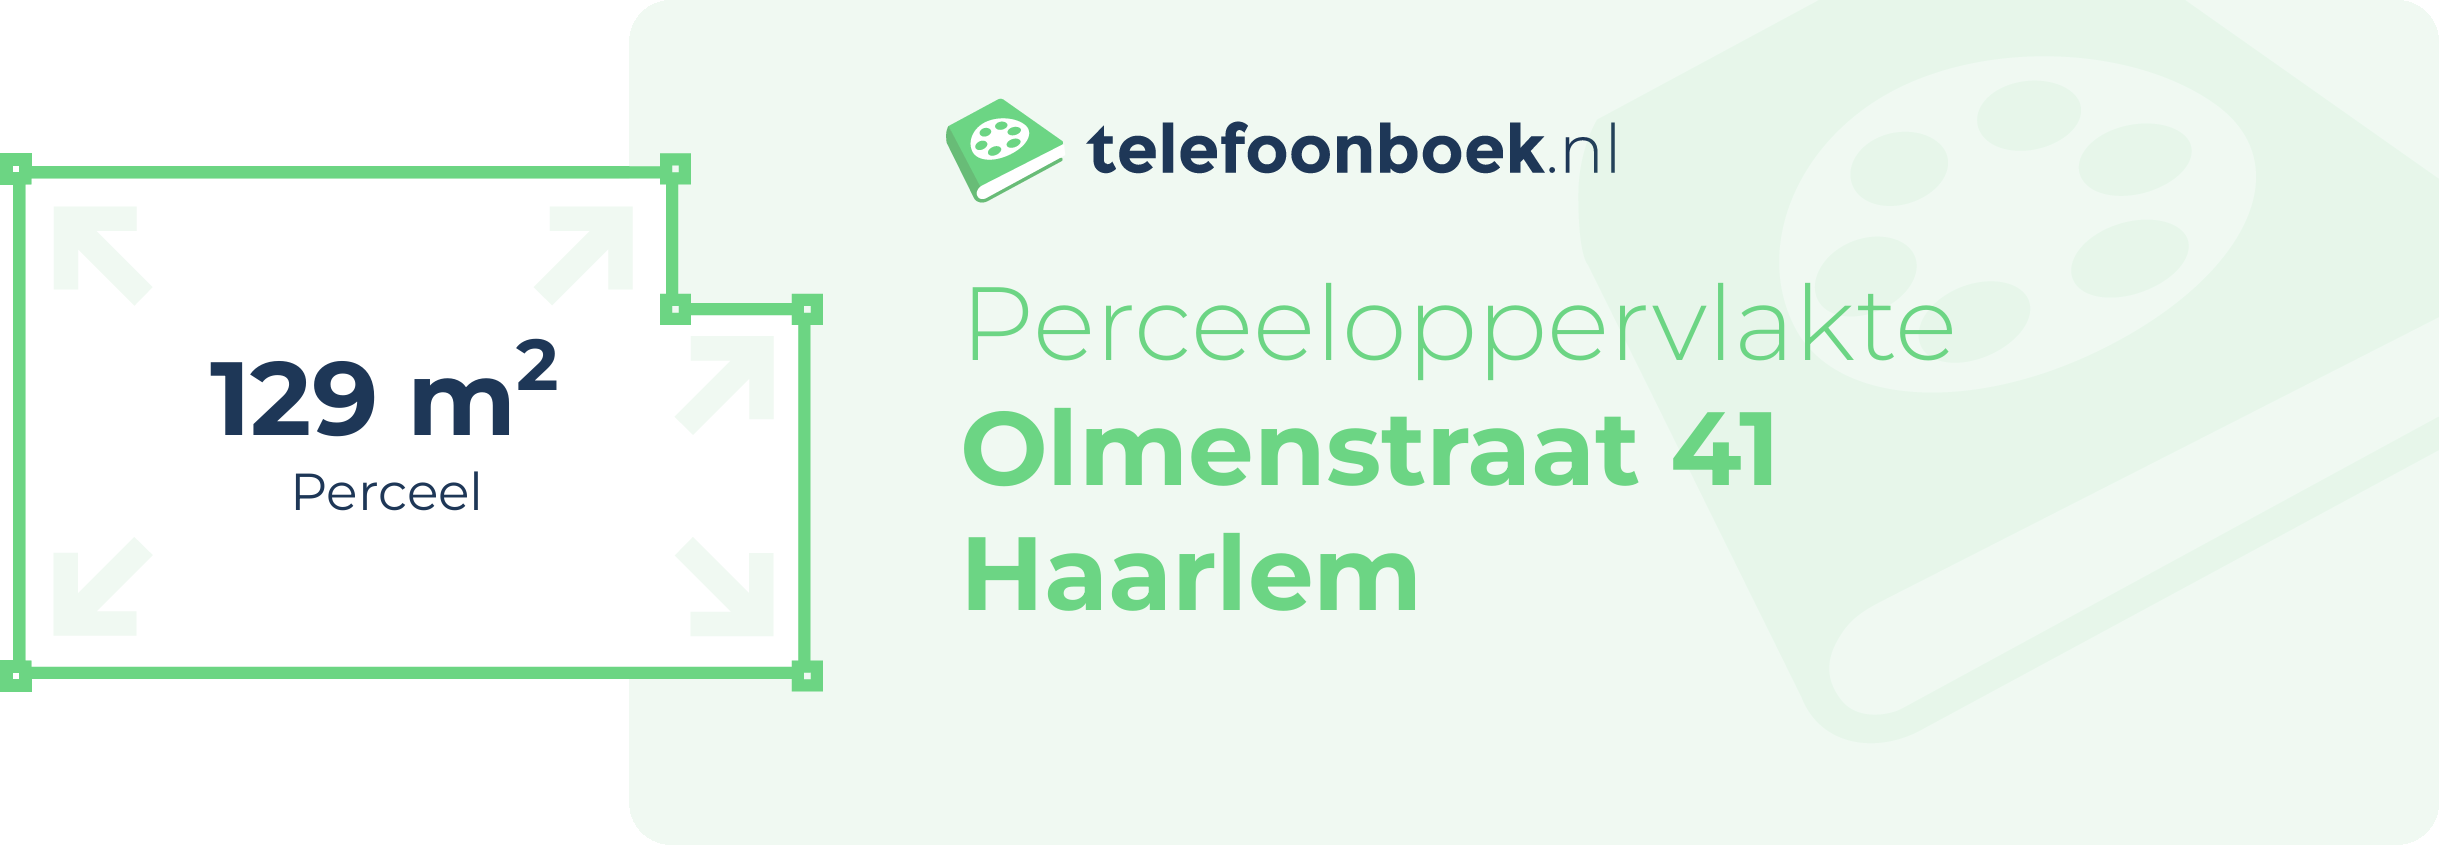 Perceeloppervlakte Olmenstraat 41 Haarlem